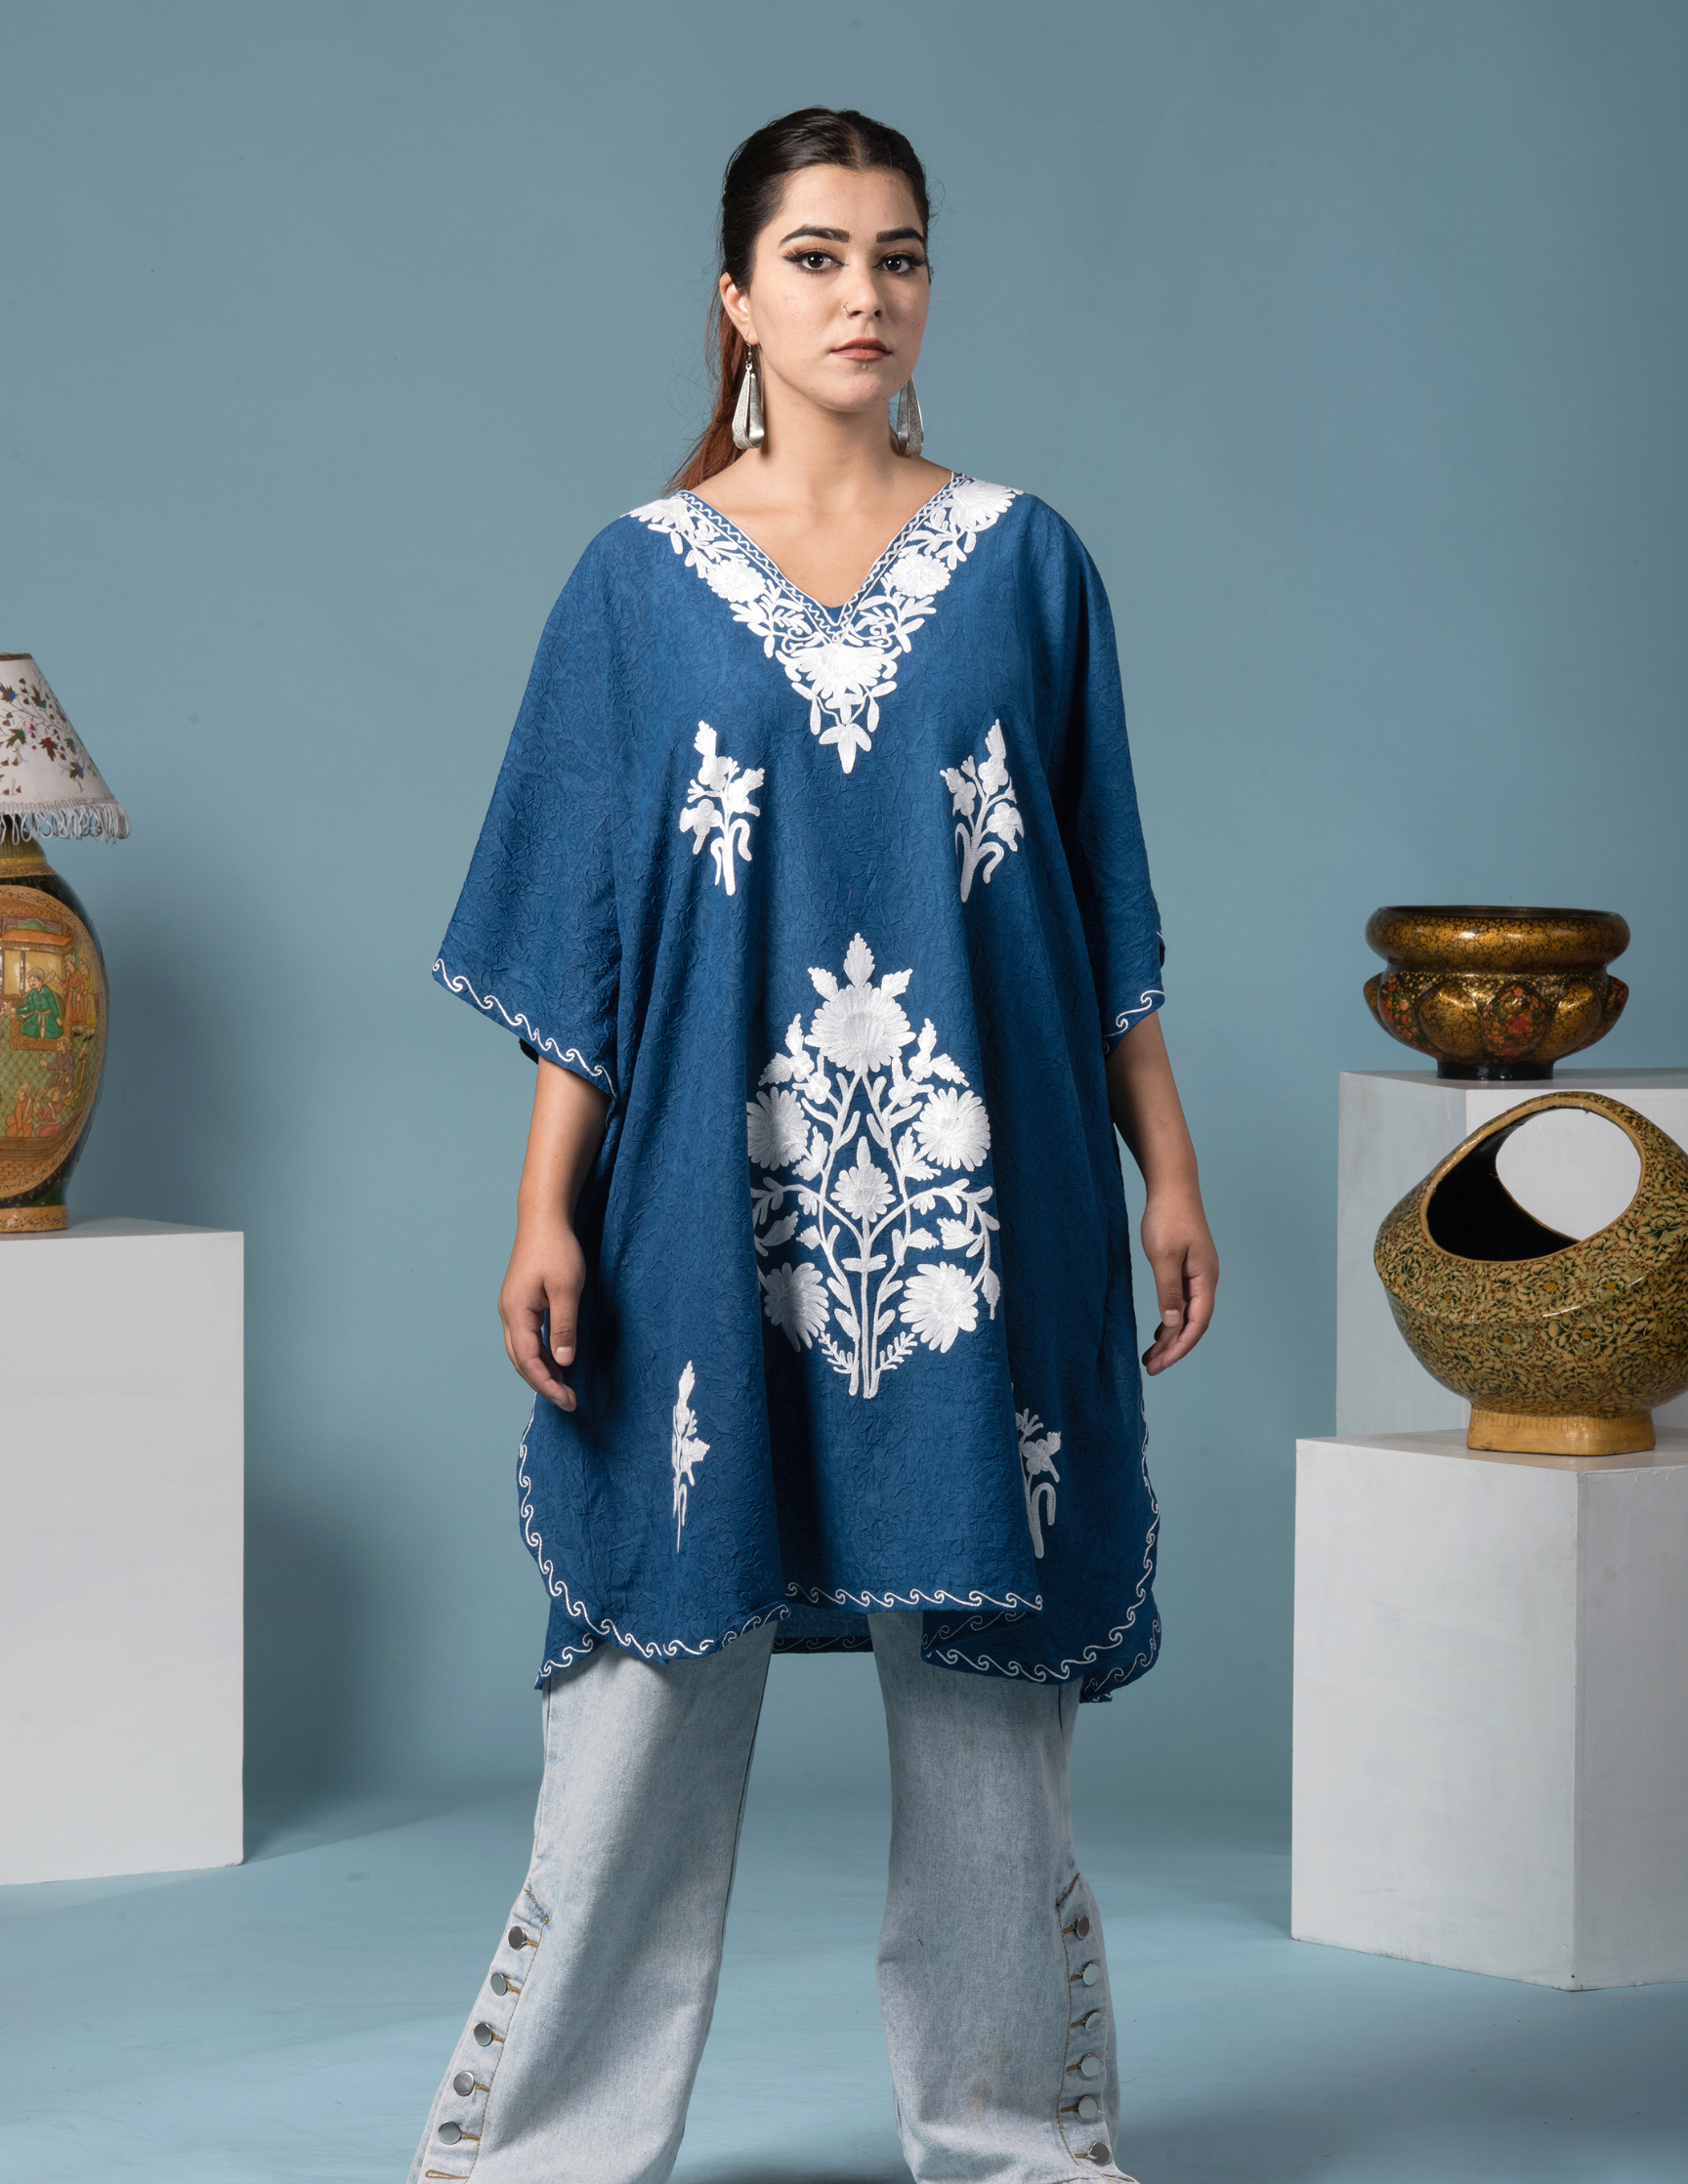 Classic Blue Aari Embroidered Short Kaftan - Kashmir Box